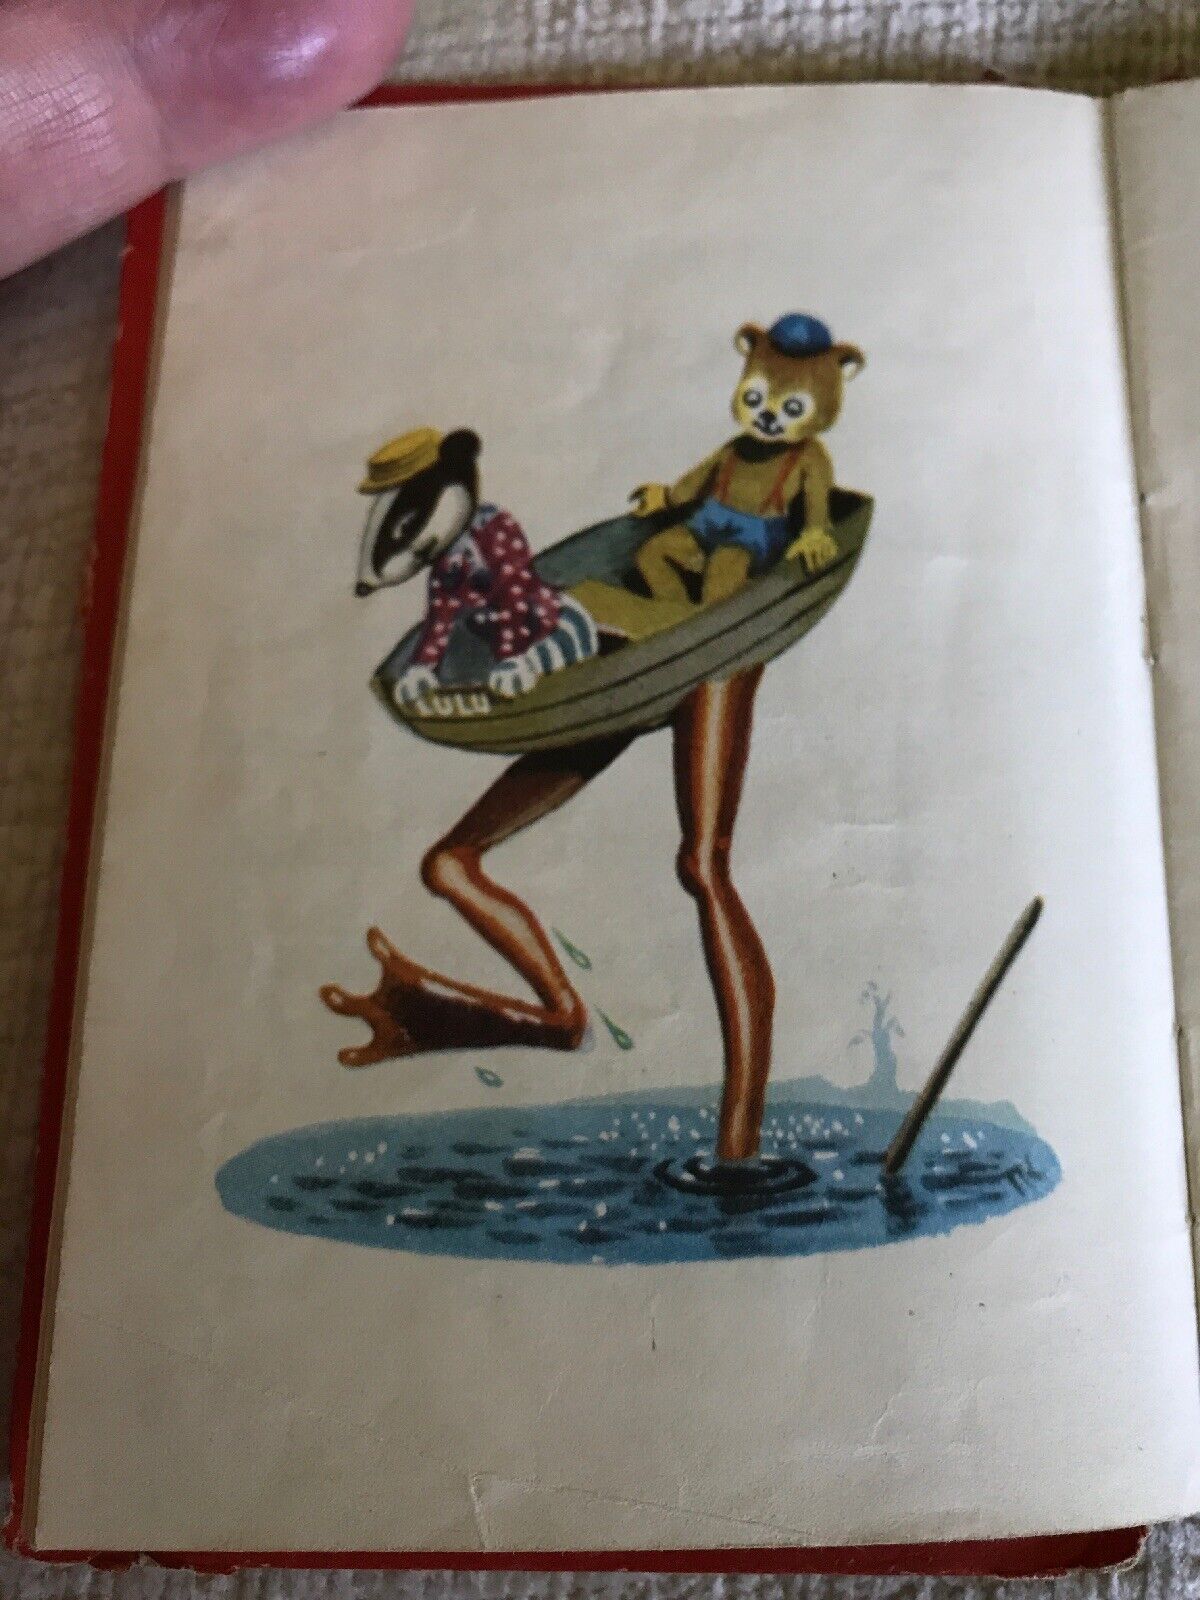 1940’s Bobby The Badger (Peekobook)Patience Powell (Perrys Colour Books) Honeyburn Books (UK)